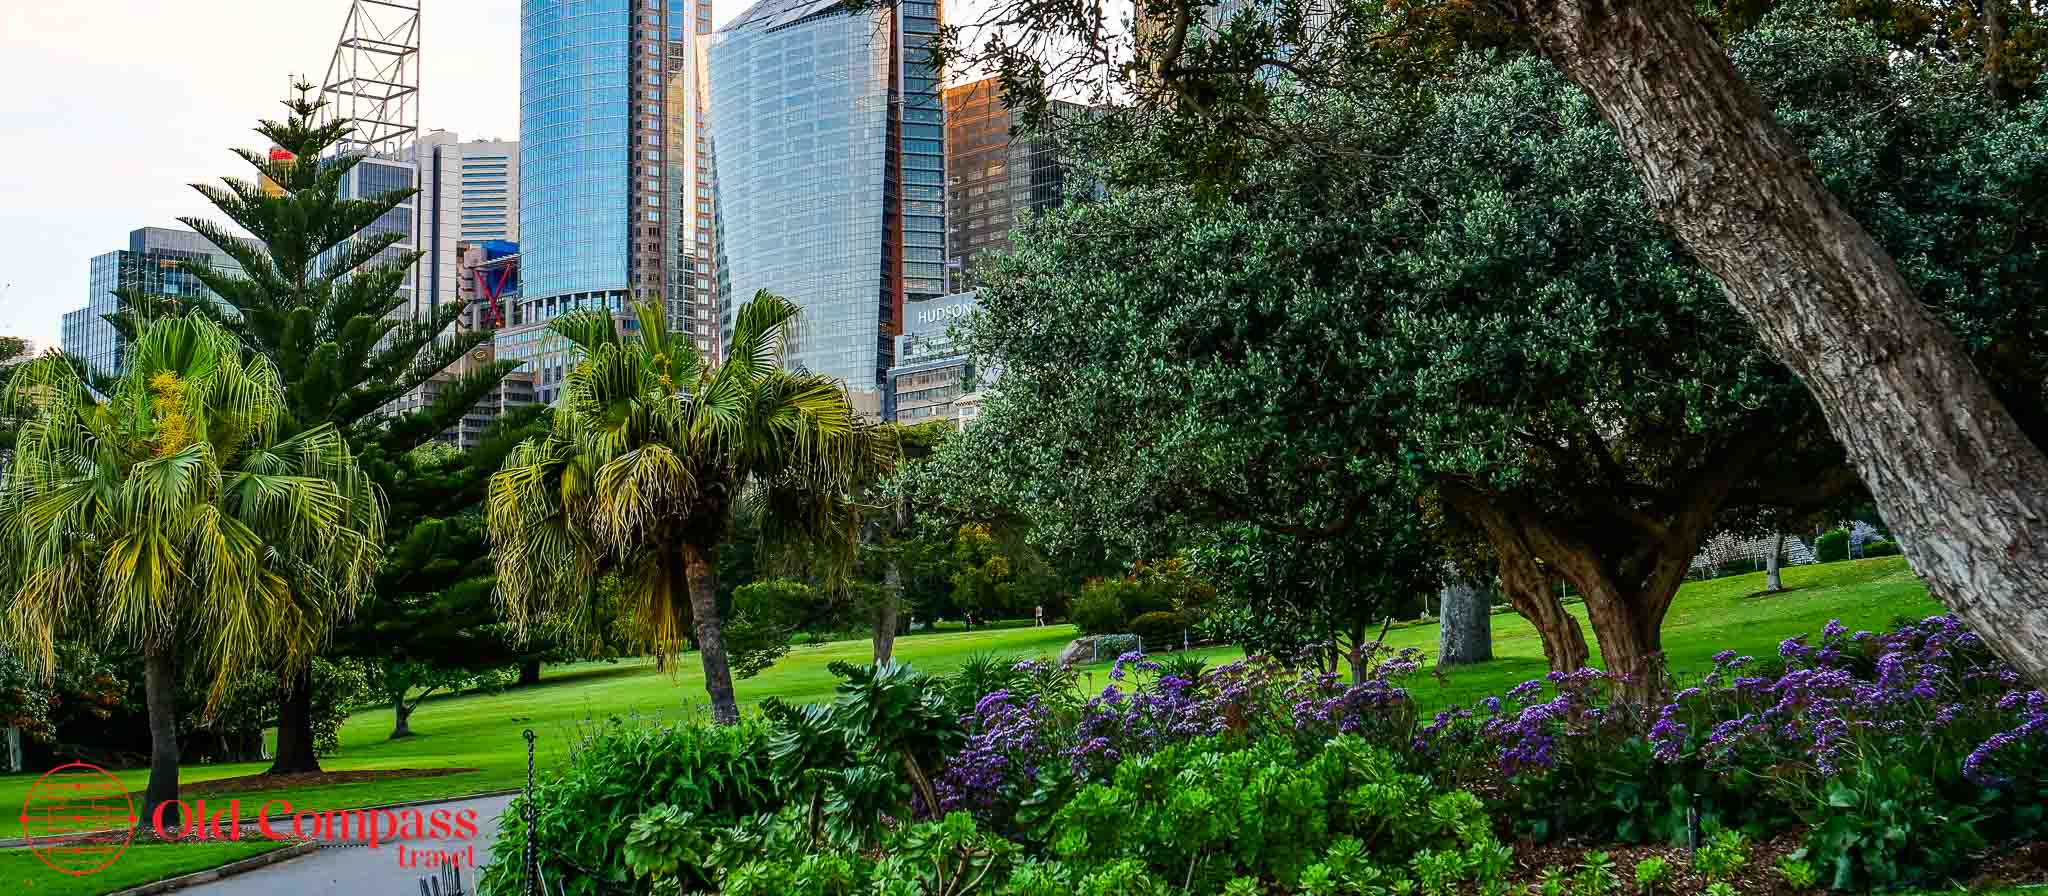 Royal Botanical Gardens and the modern Sydney skyline